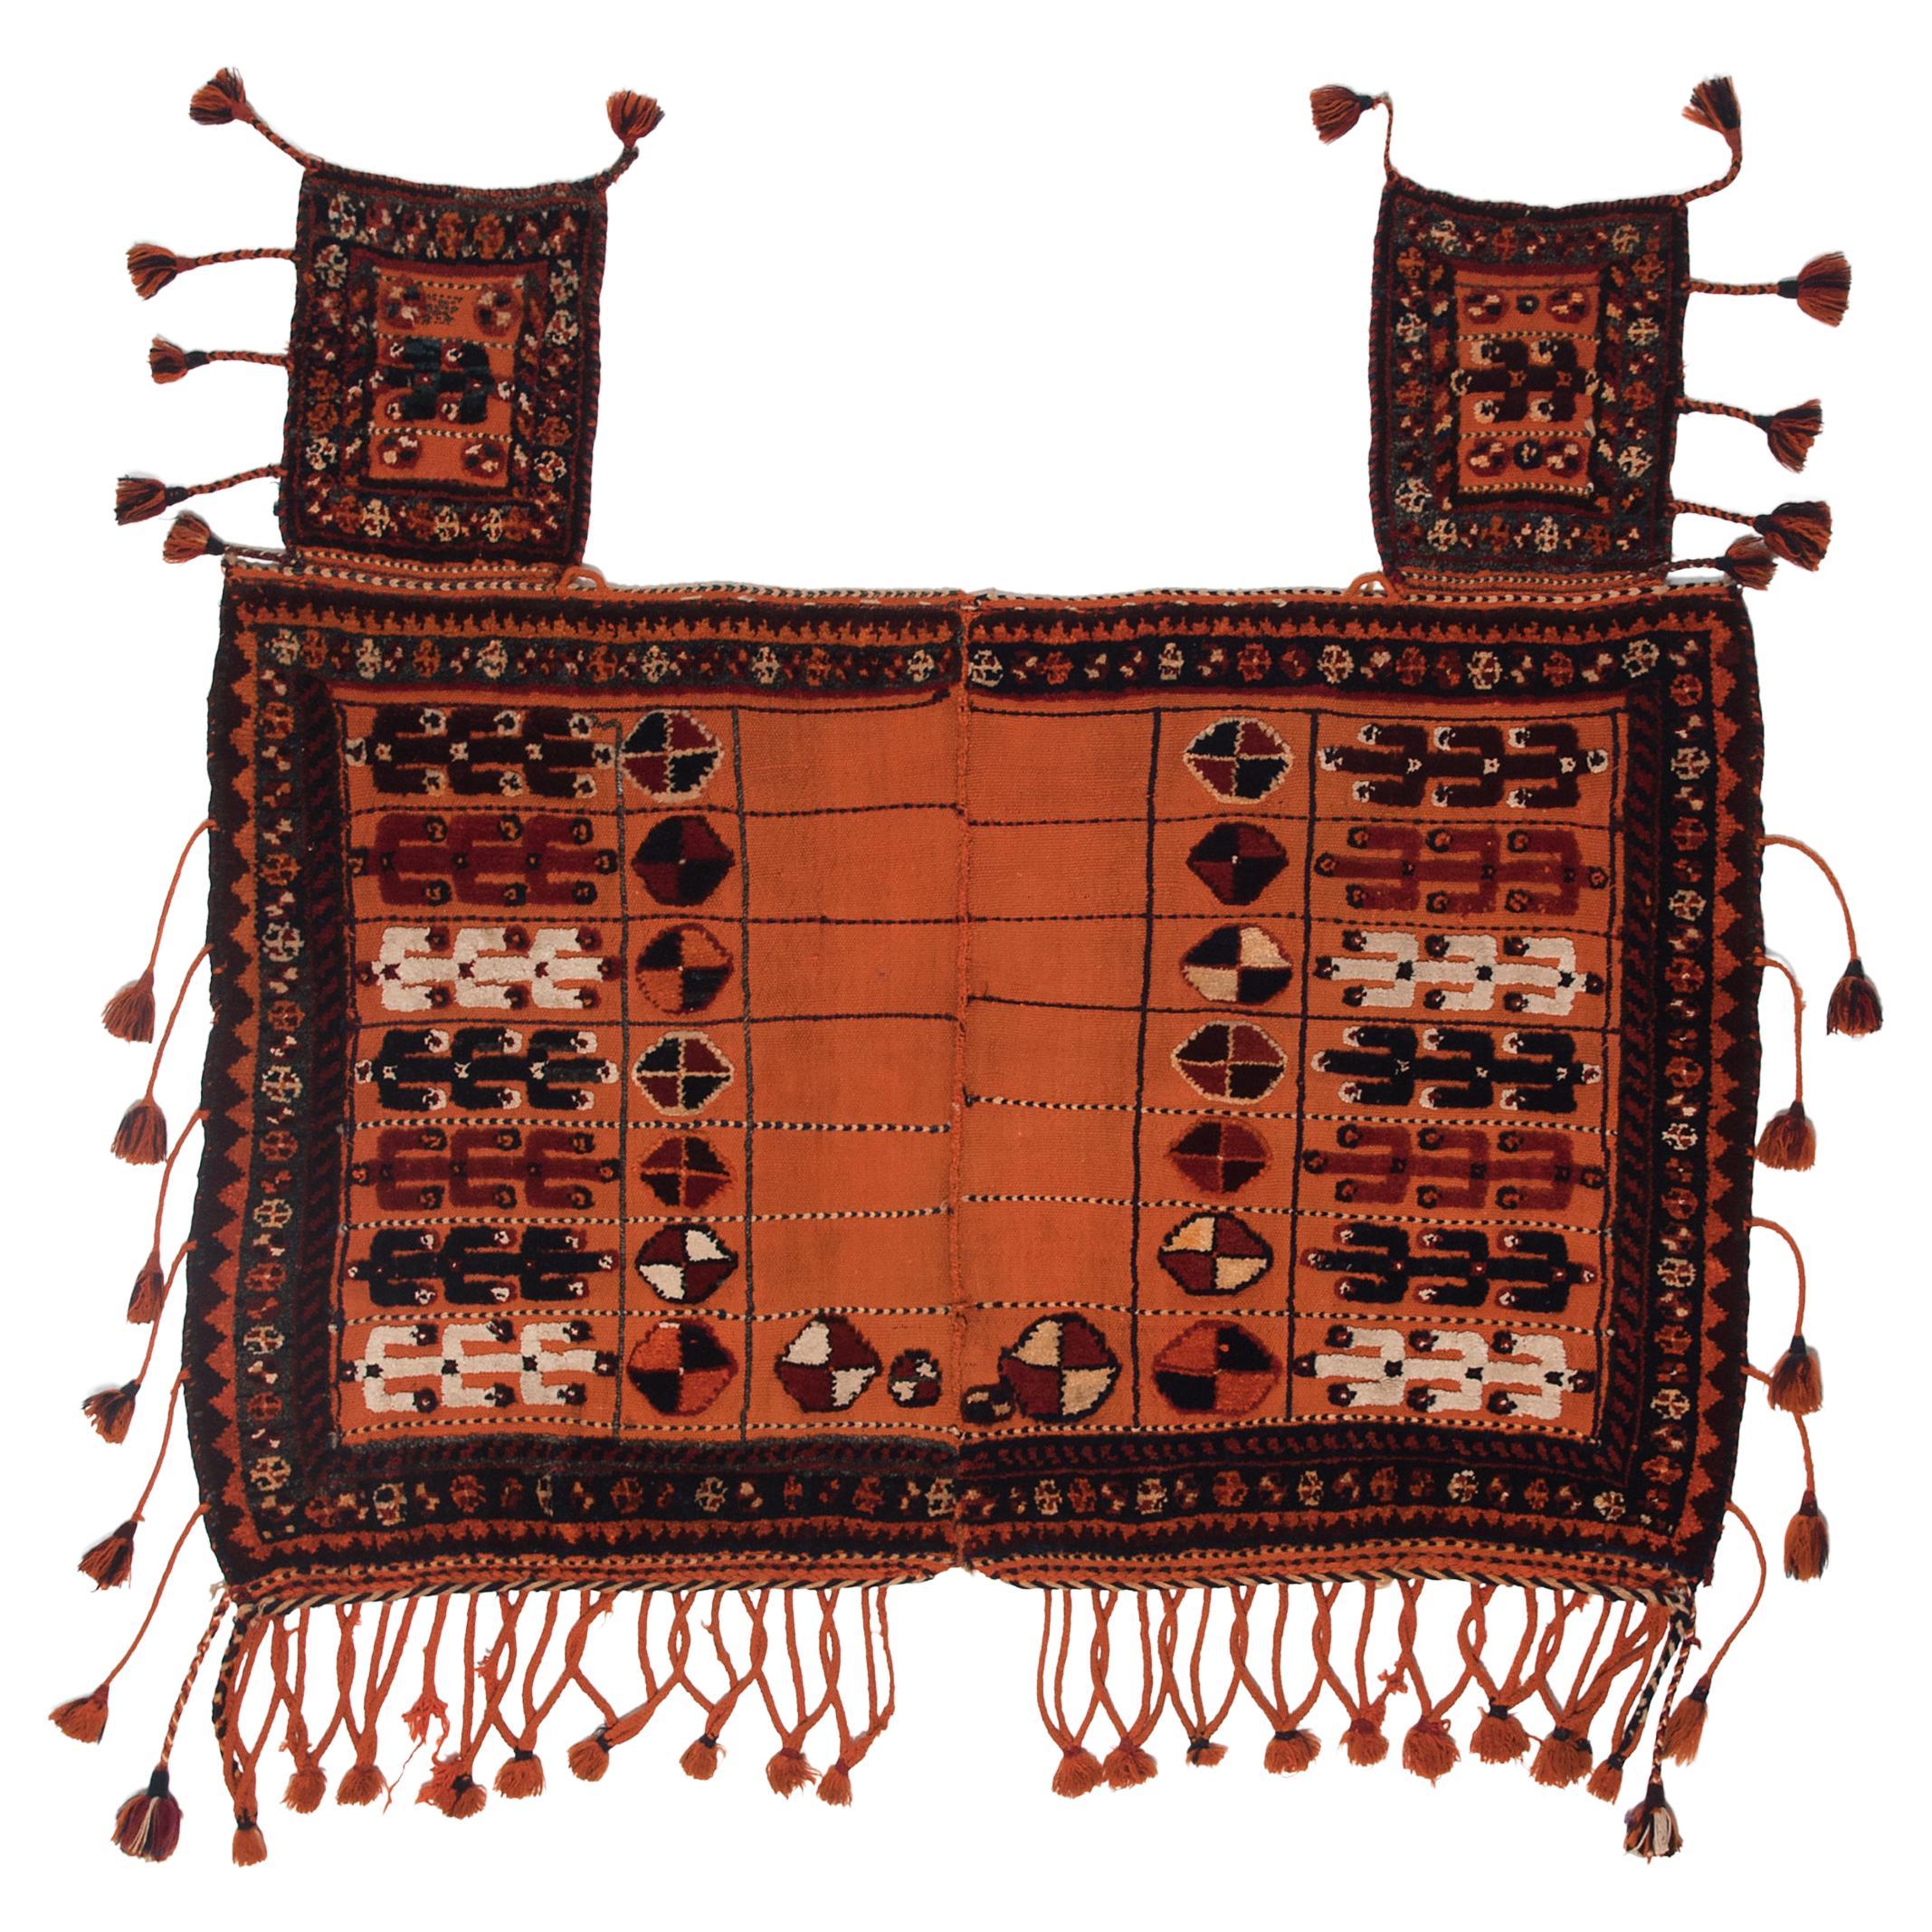 Antique Turkmen Horse Cover Blanket with Tassel Fringe